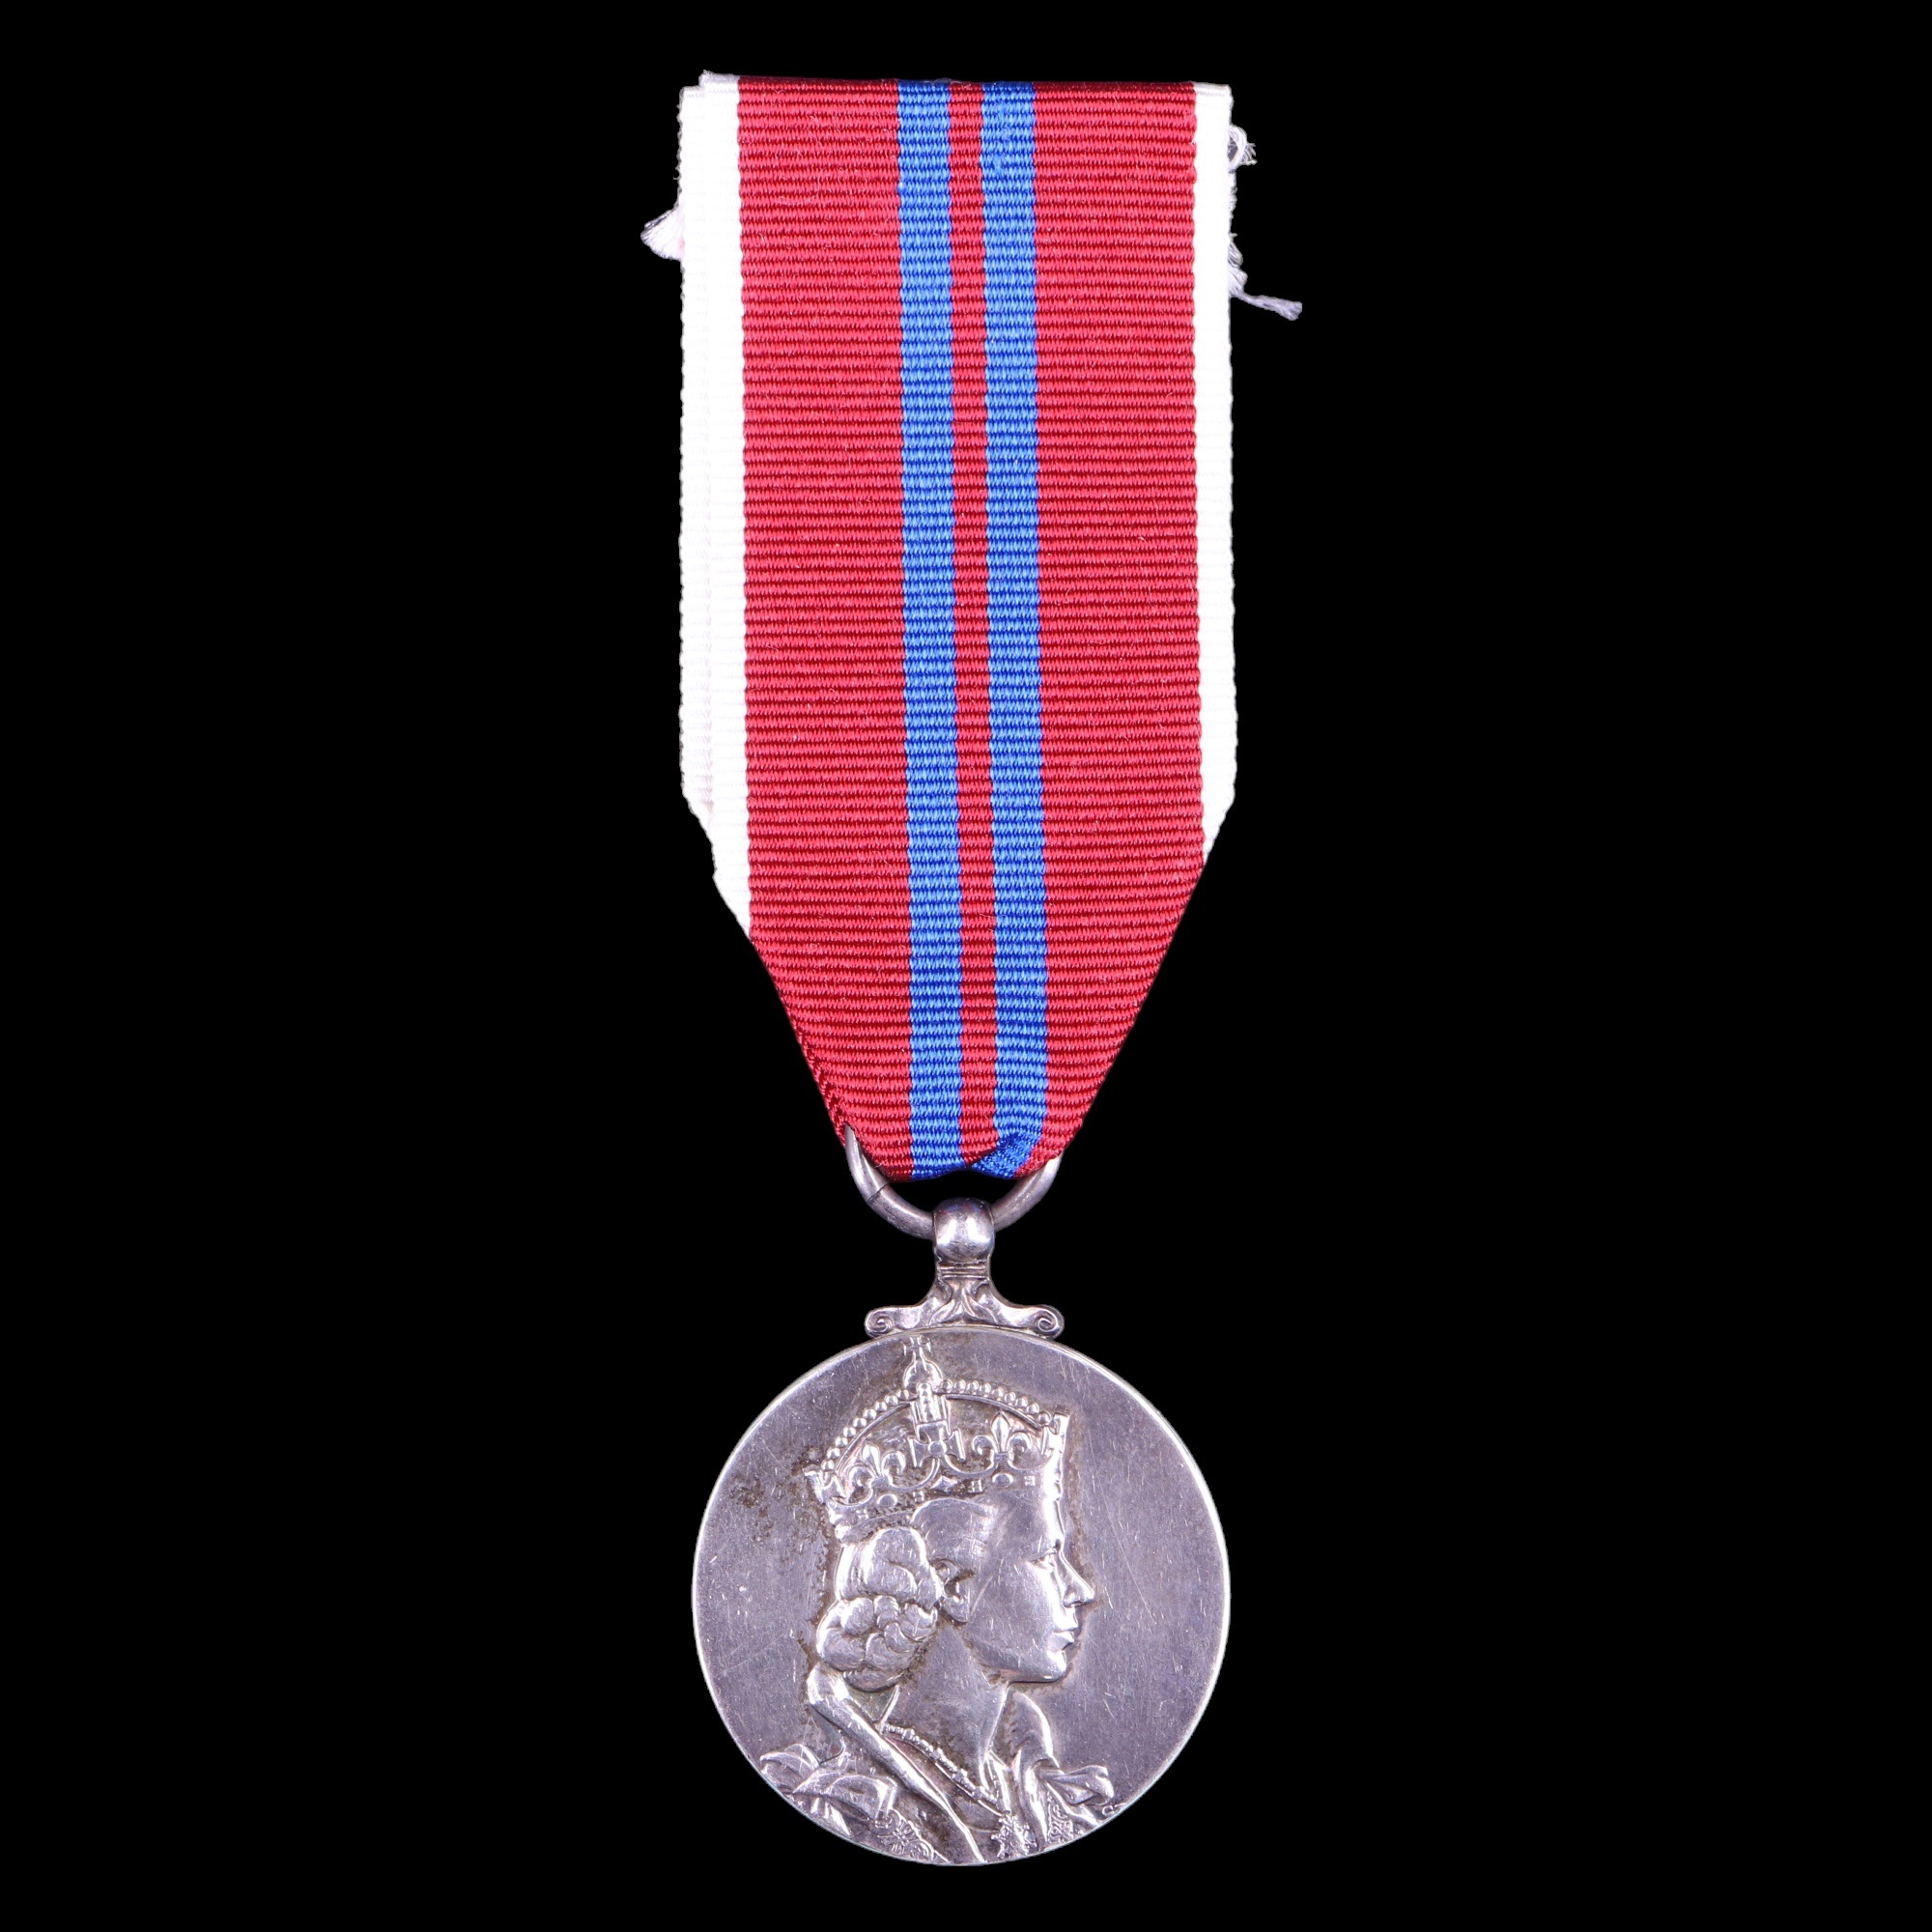 A Queen Elizabeth II 1953 Coronation Medal